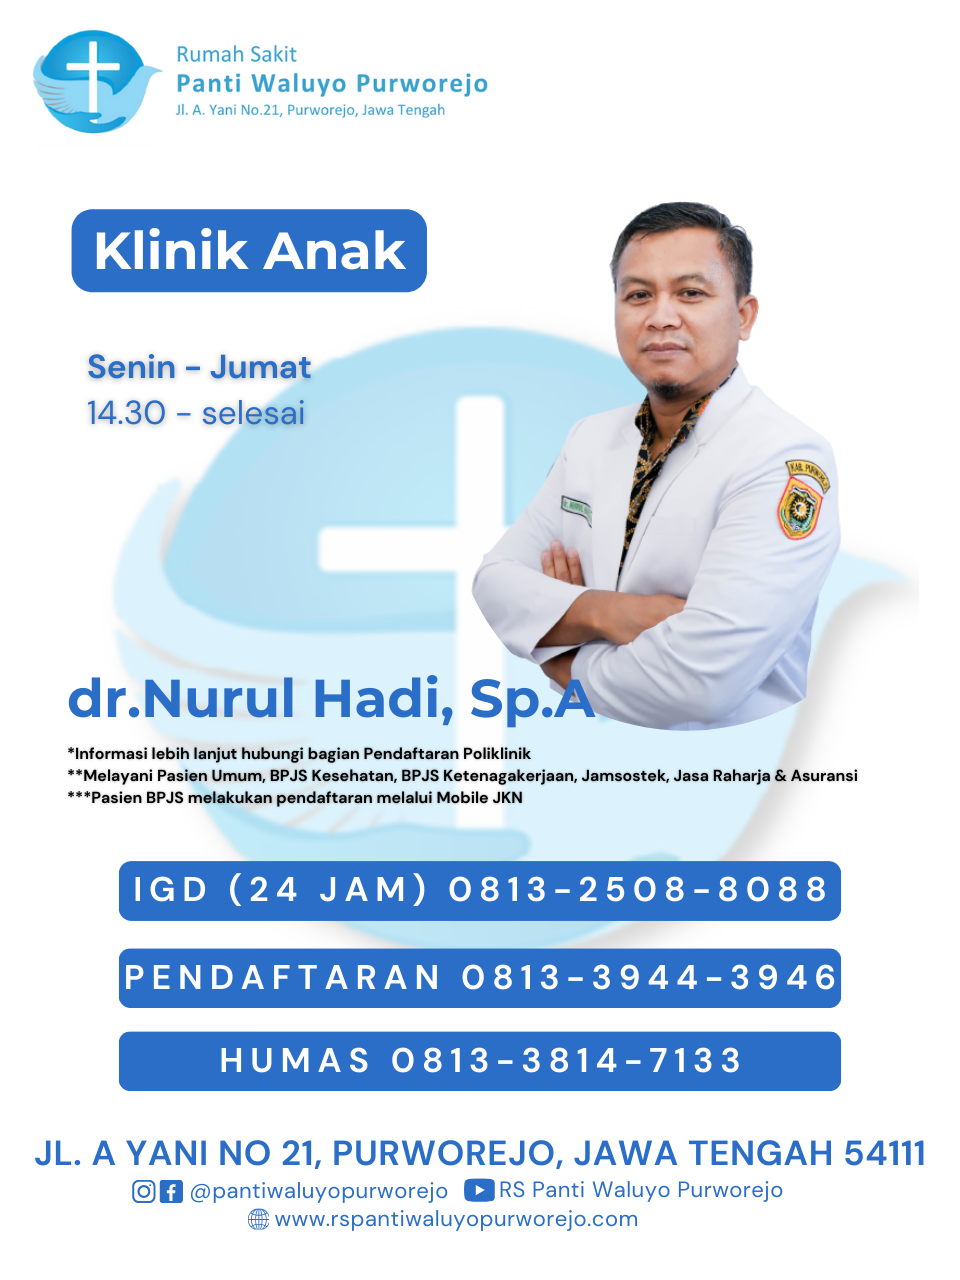 dr. Nurul Hadi, Sp.A